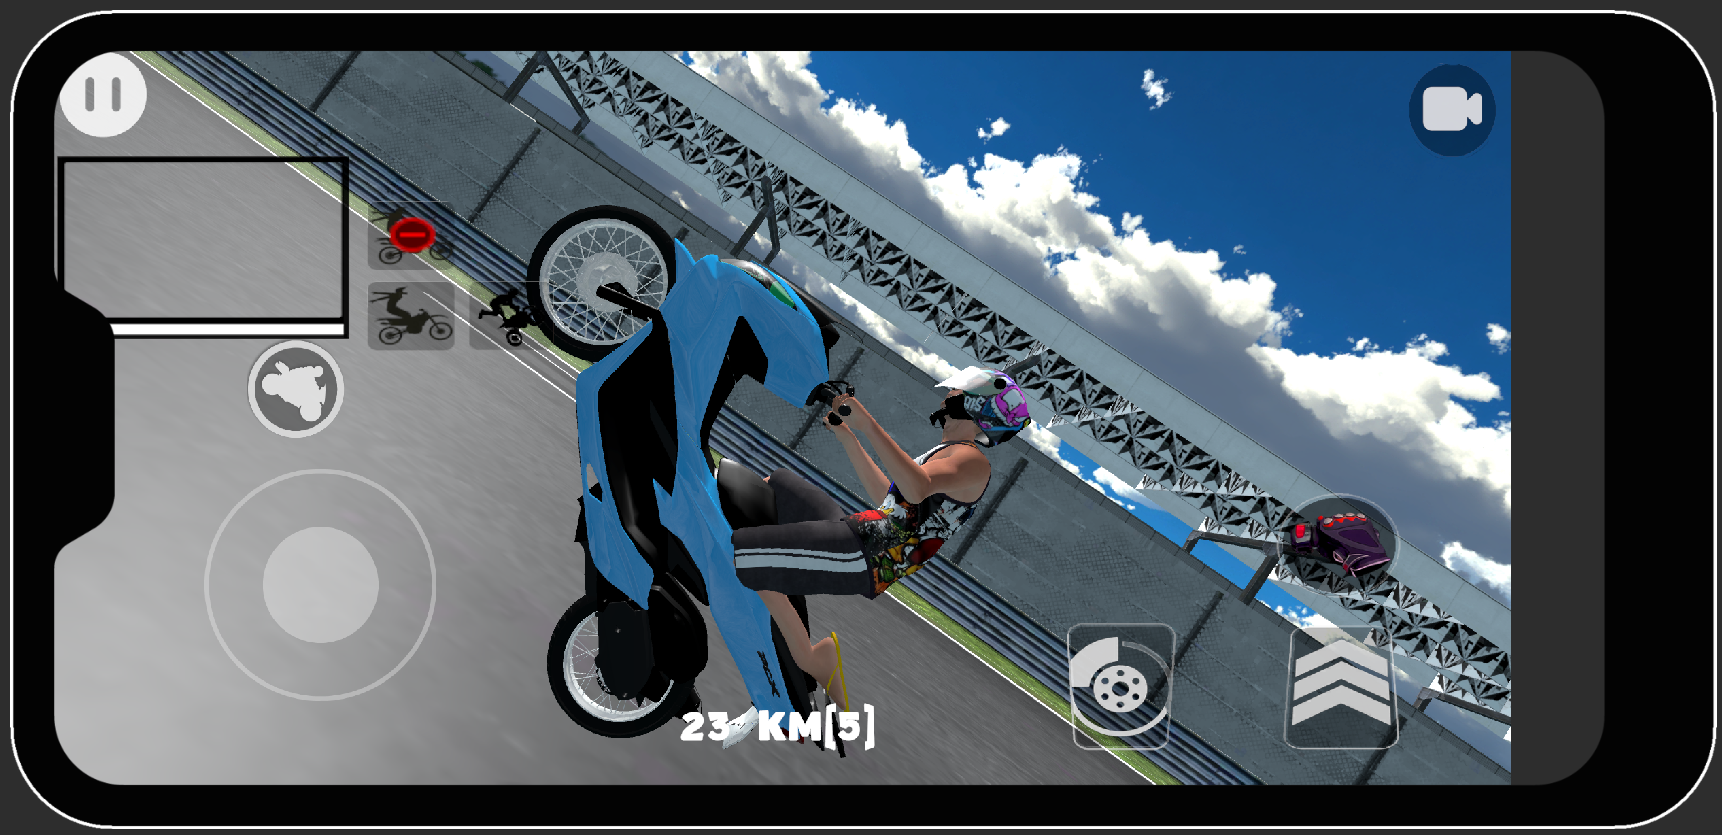 MX Grau stunt simulator android iOS apk download for free-TapTap